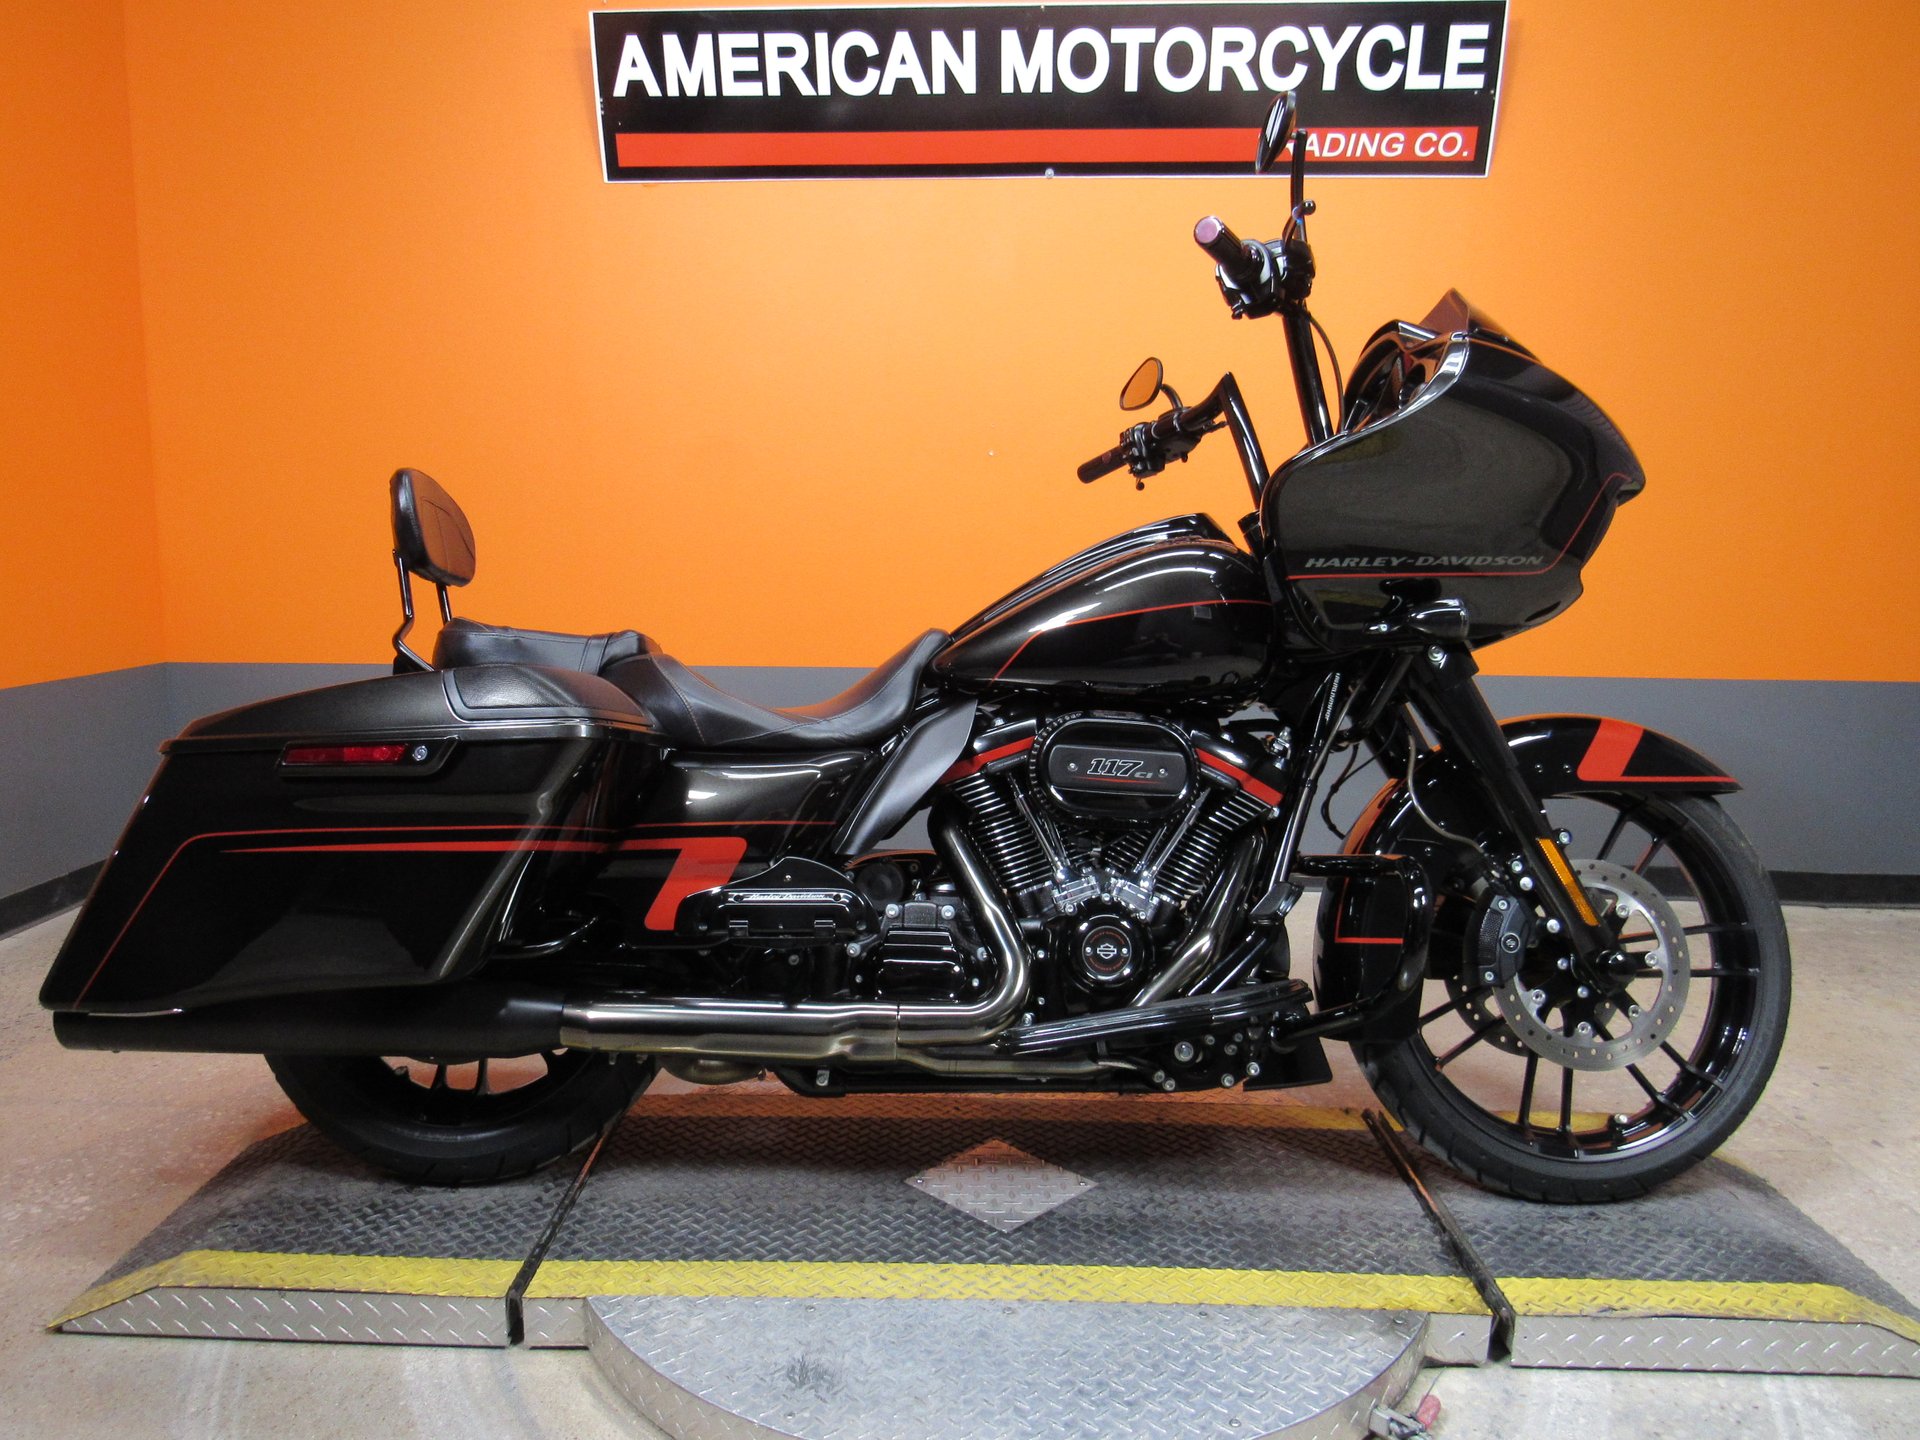 2018 Harley Davidson Cvo Road Glide American Motorcycle Trading Company Used Harley Davidson Motorcycles